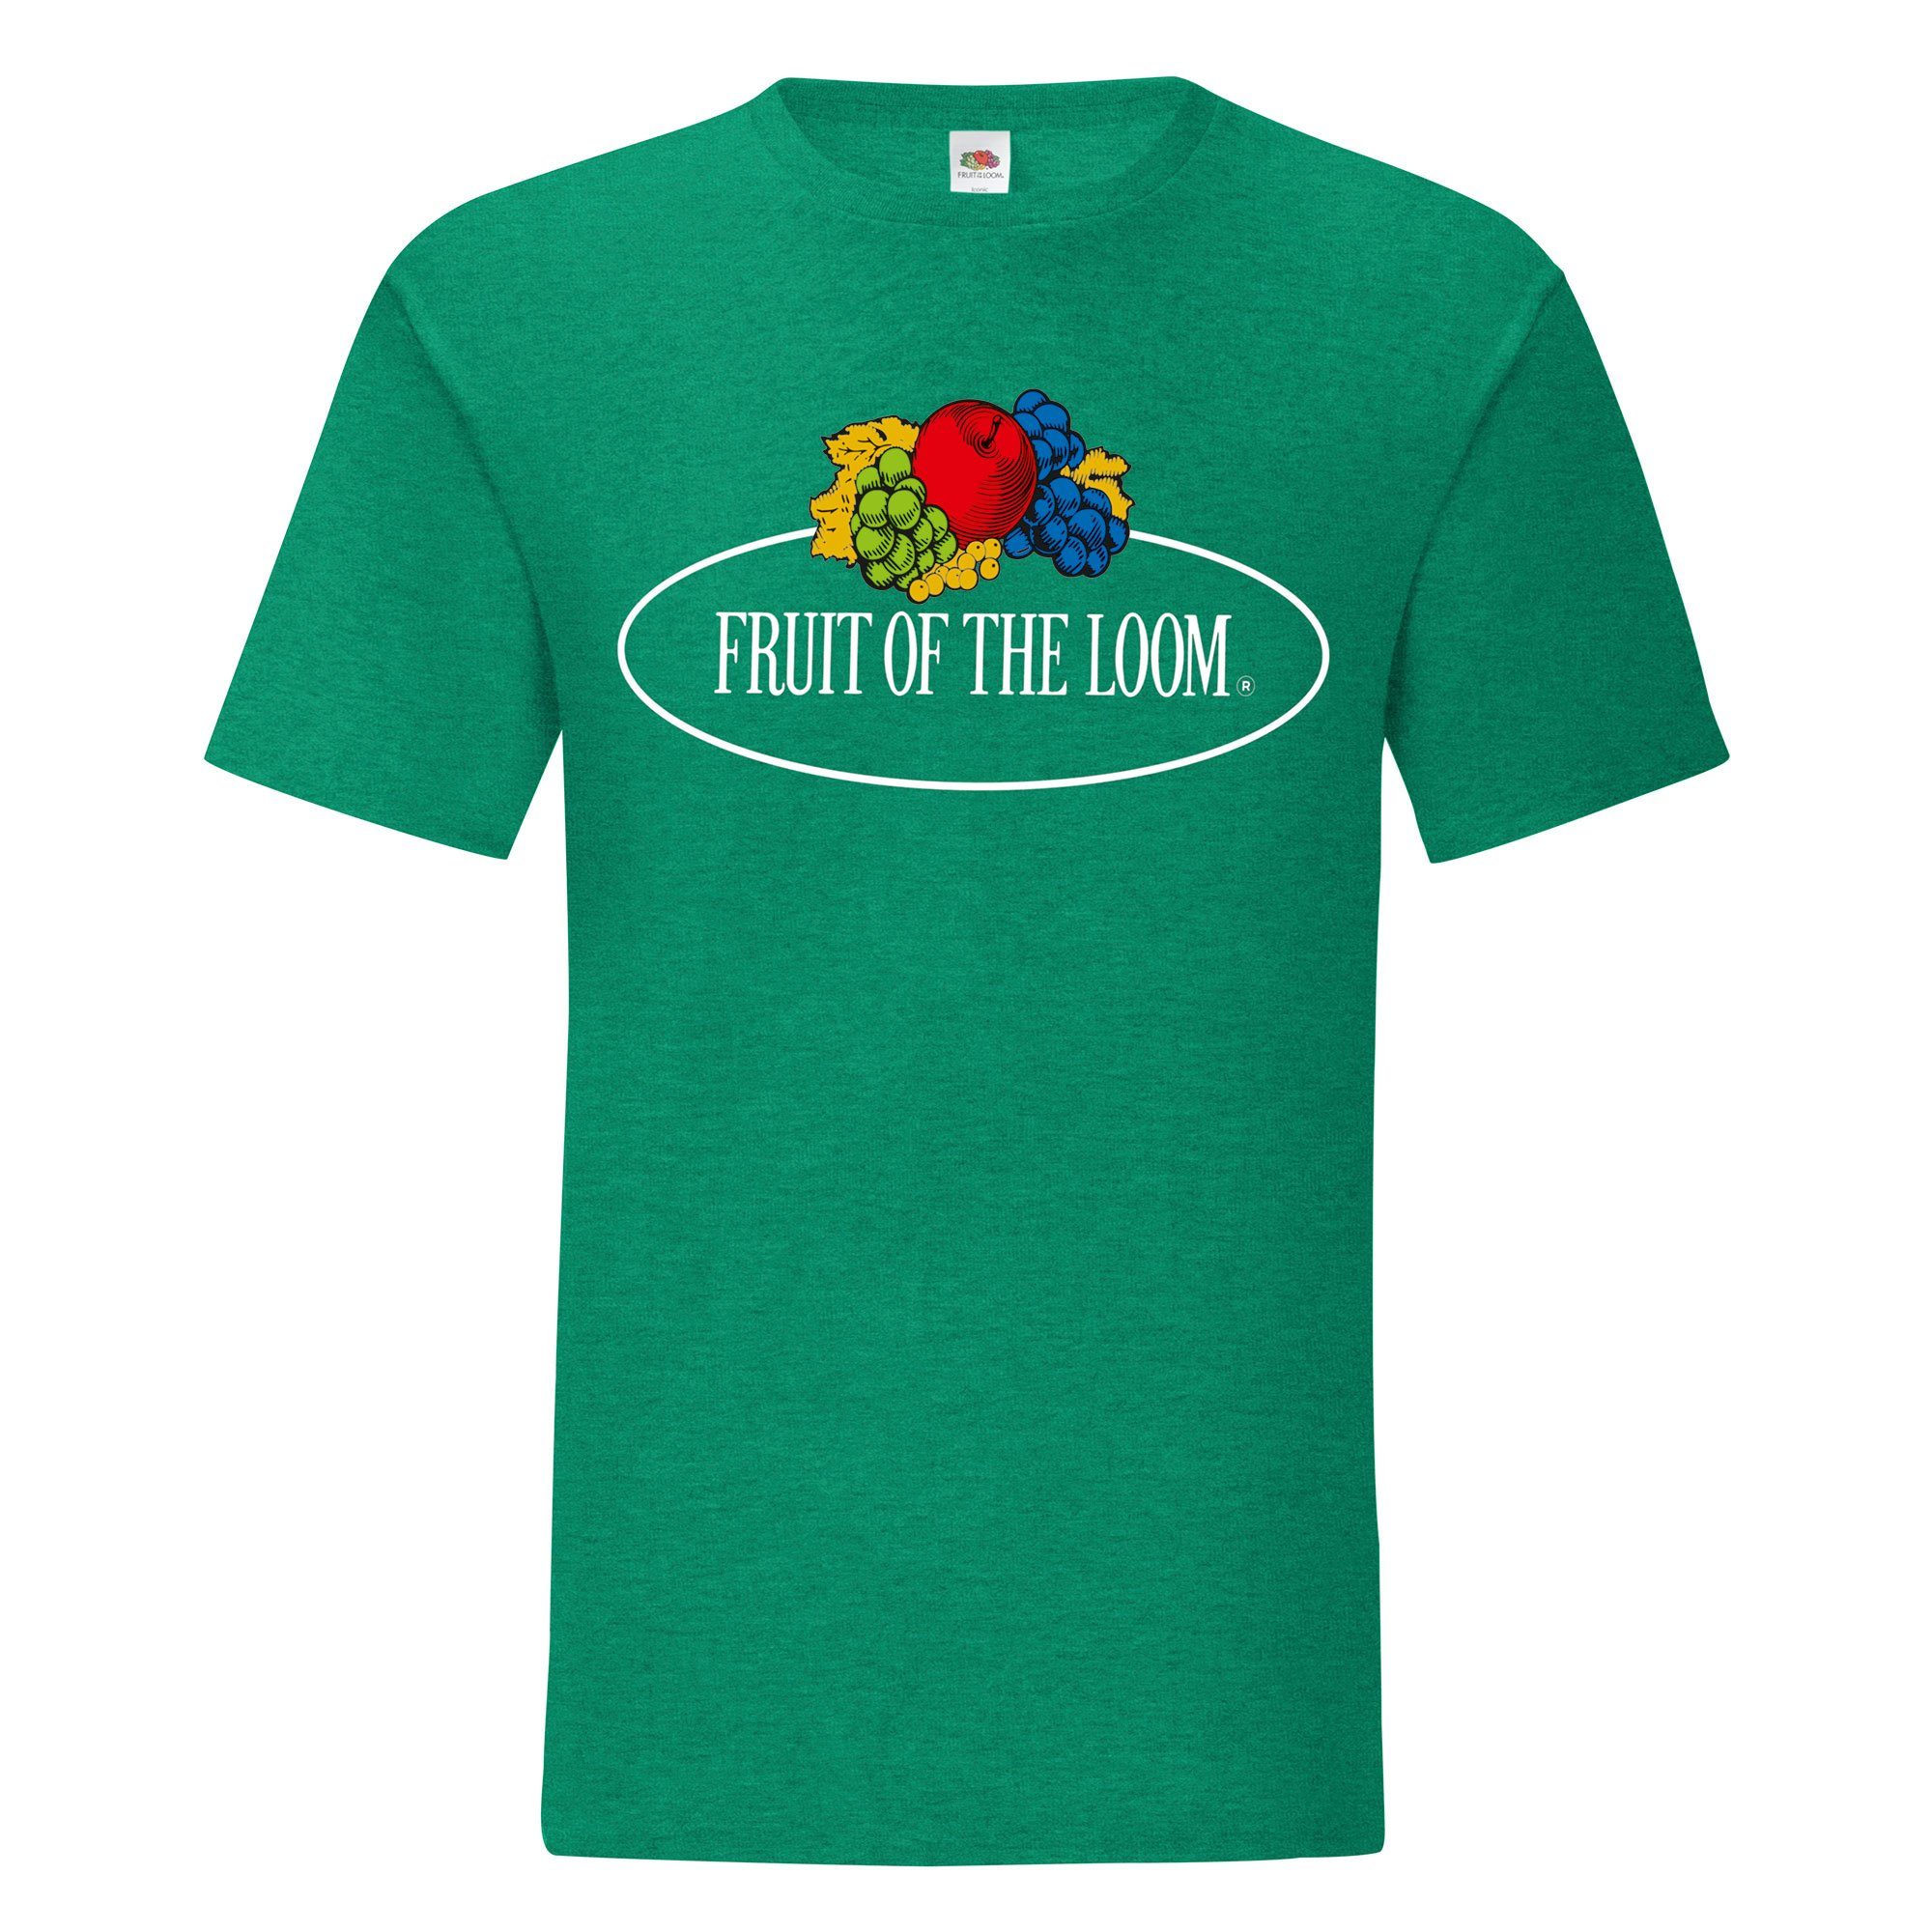 Fruit of meliert retro grün the Vintage-Logo - 150 T-Shirt groß Loom Iconic Rundhalsshirt